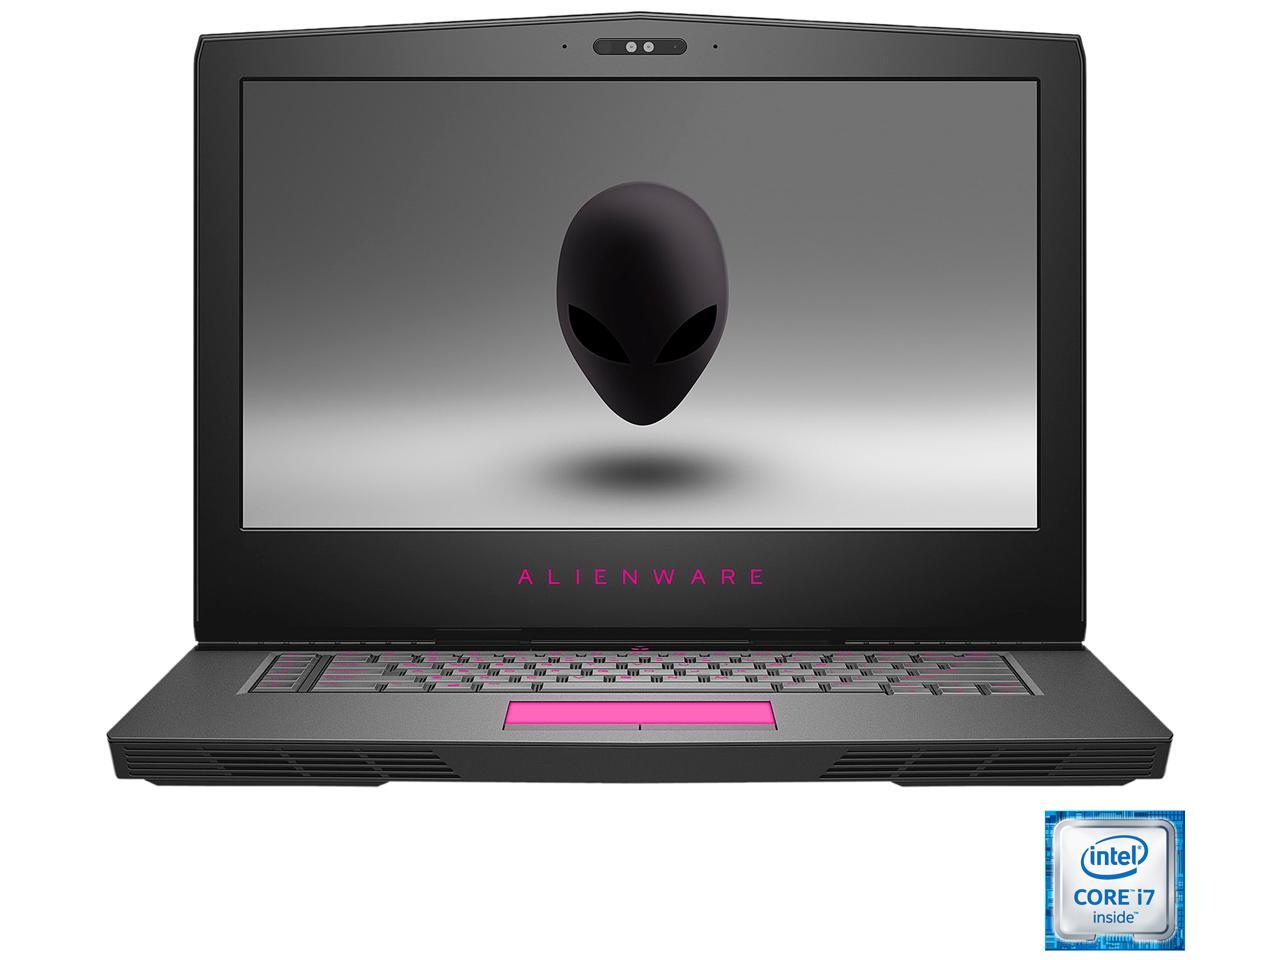 Alienware 15 R3 AW15R3-3831SLV Gaming Laptop Intel Core i7 6700HQ (2.60 GHz) 16 GB Memory 1 TB HDD 128 GB SSD NVIDIA GeForce GTX 1060 6 GB GDDR5 15.6" Windows 10 Home 64-Bit (VR Ready)